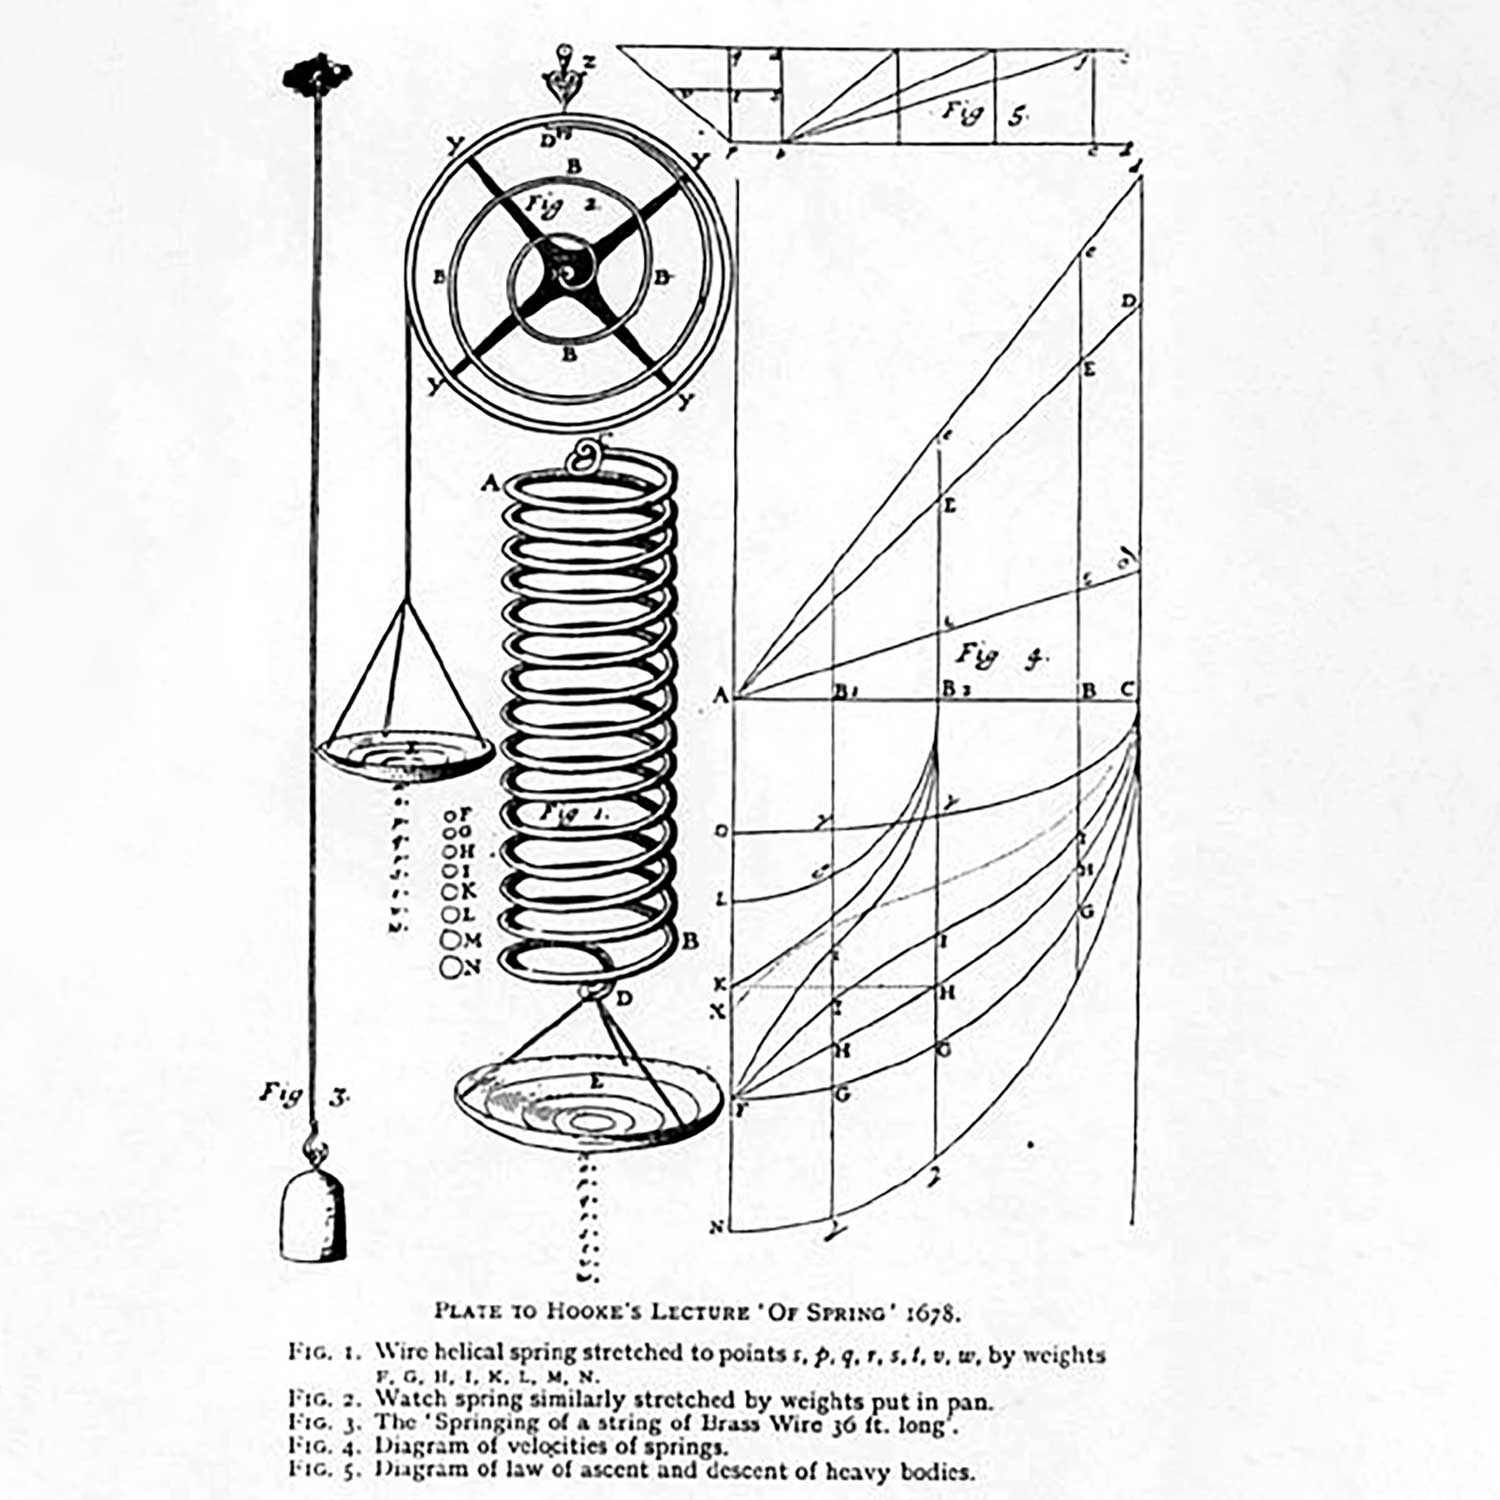 Robert Hooke's 1678 lecture of springs